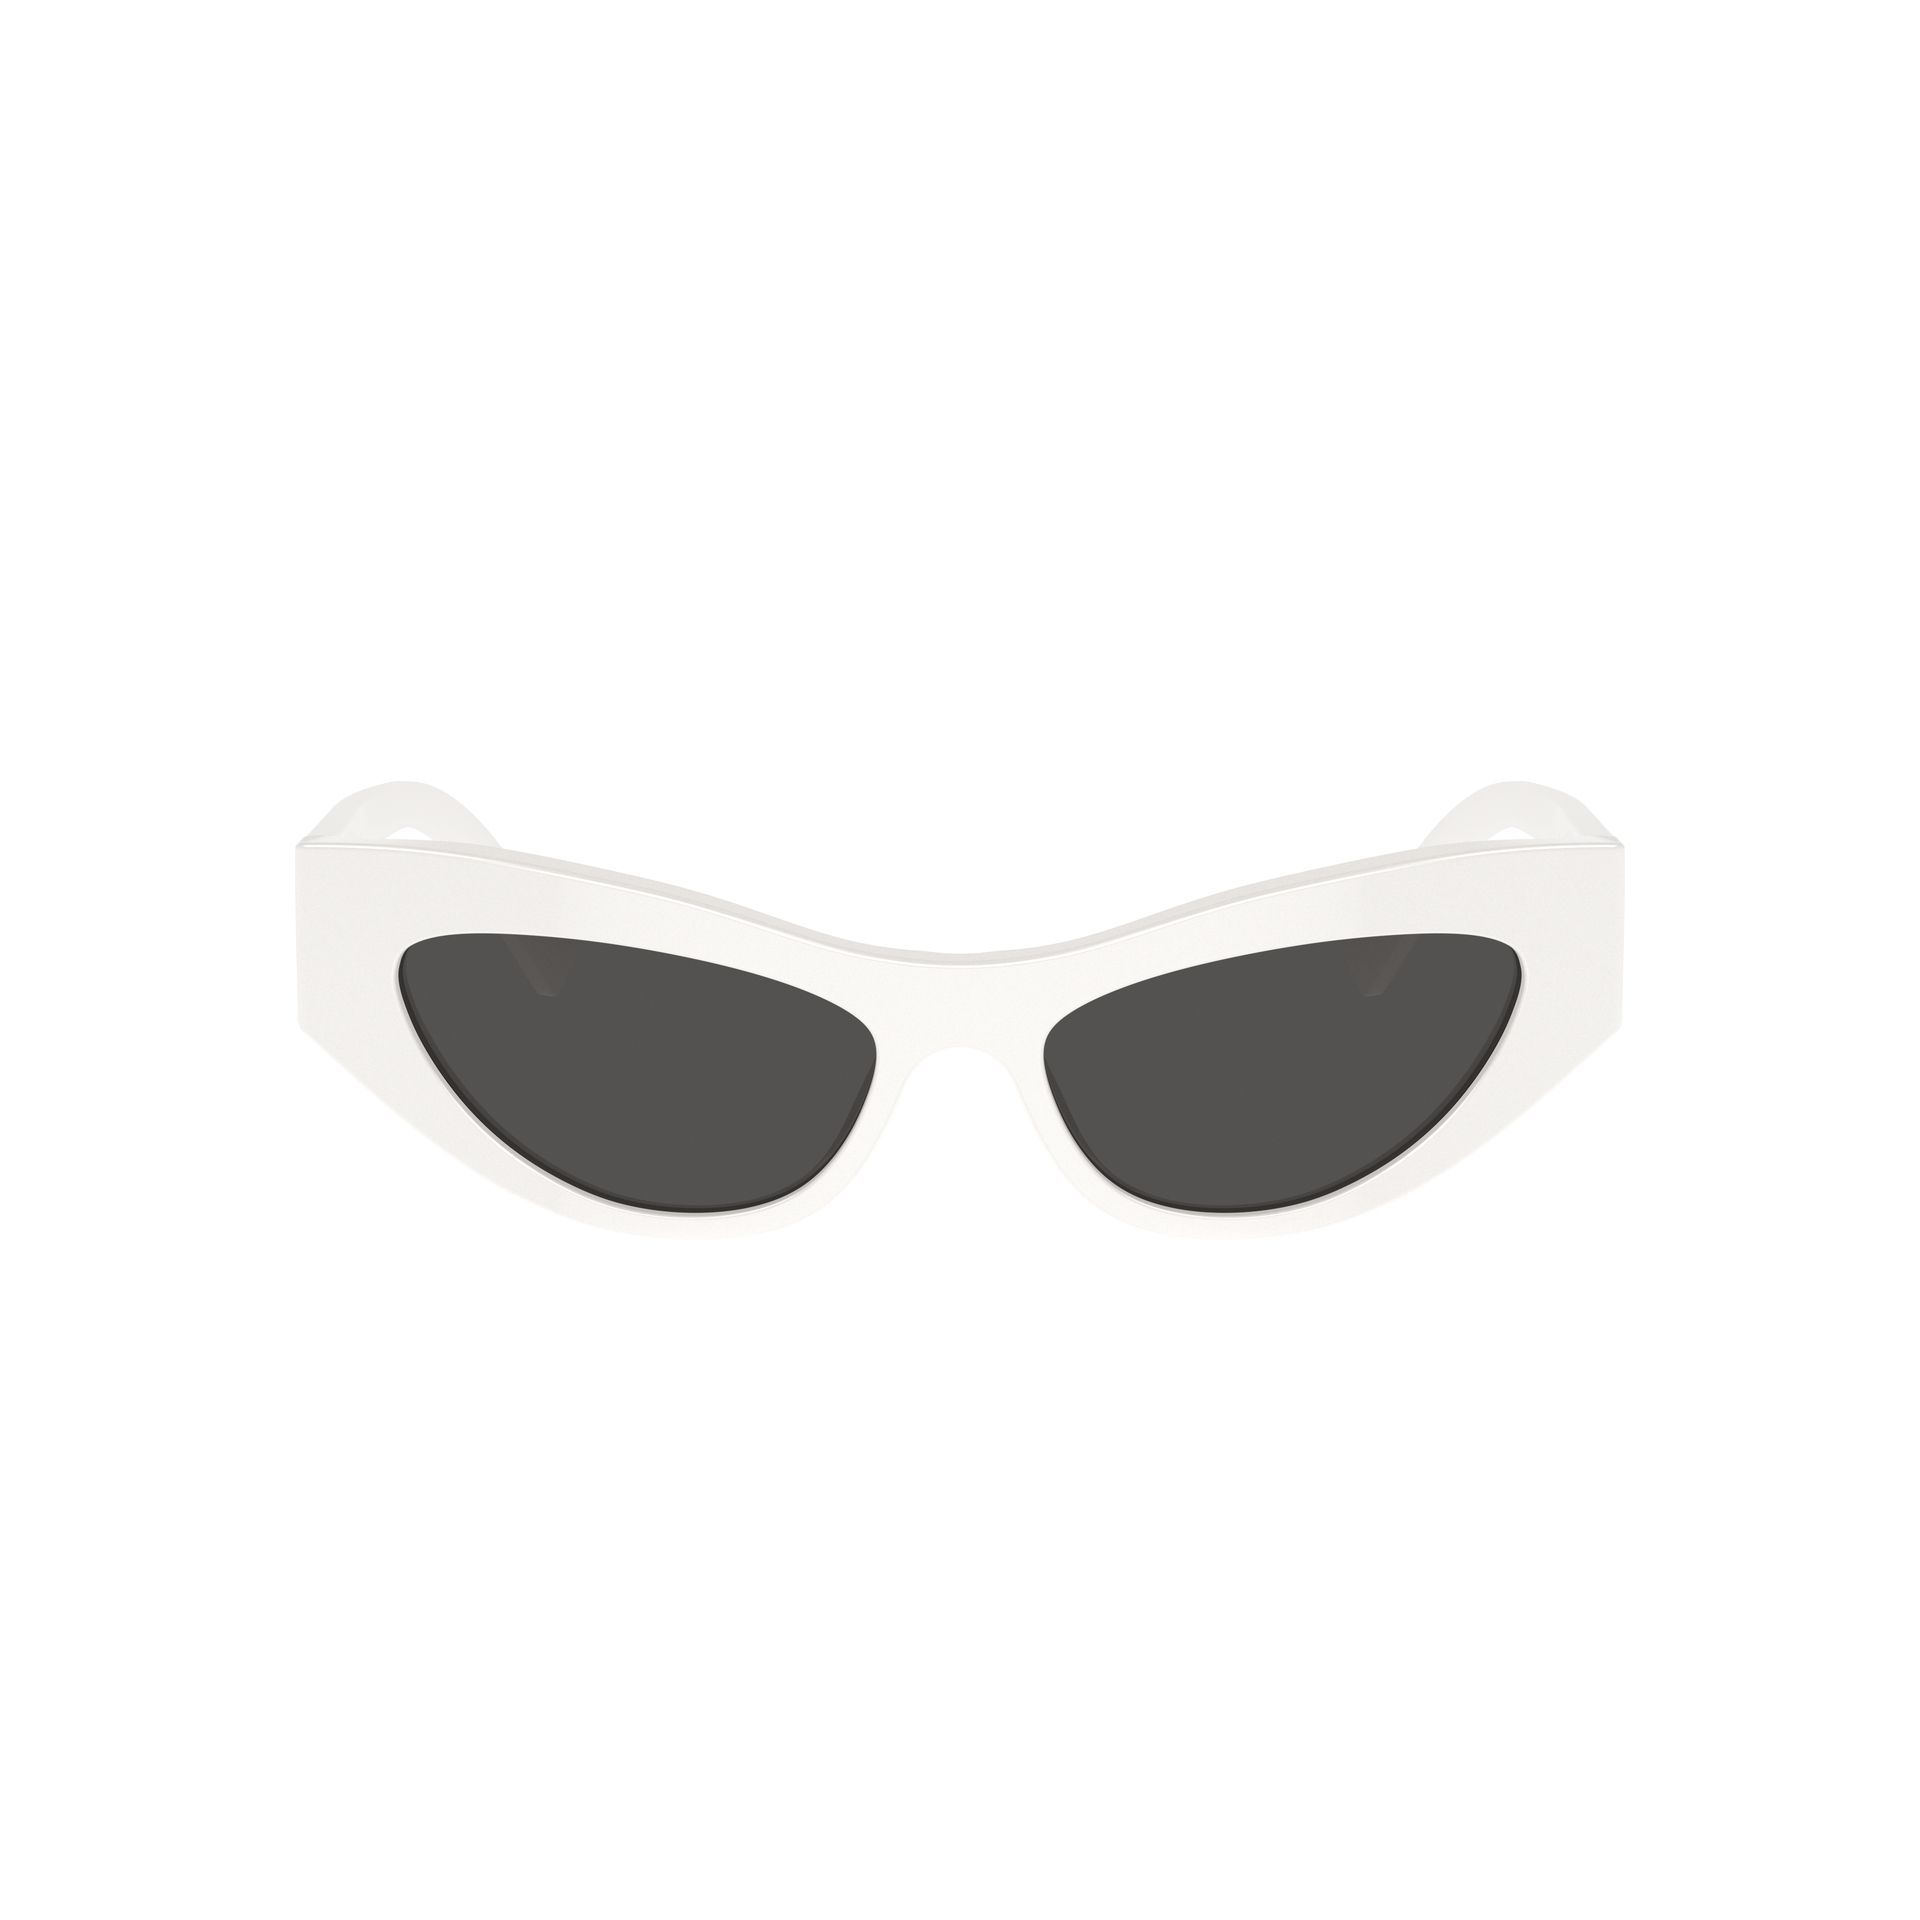 0DG4450 Cateye Sunglasses 3312 87 - size 52